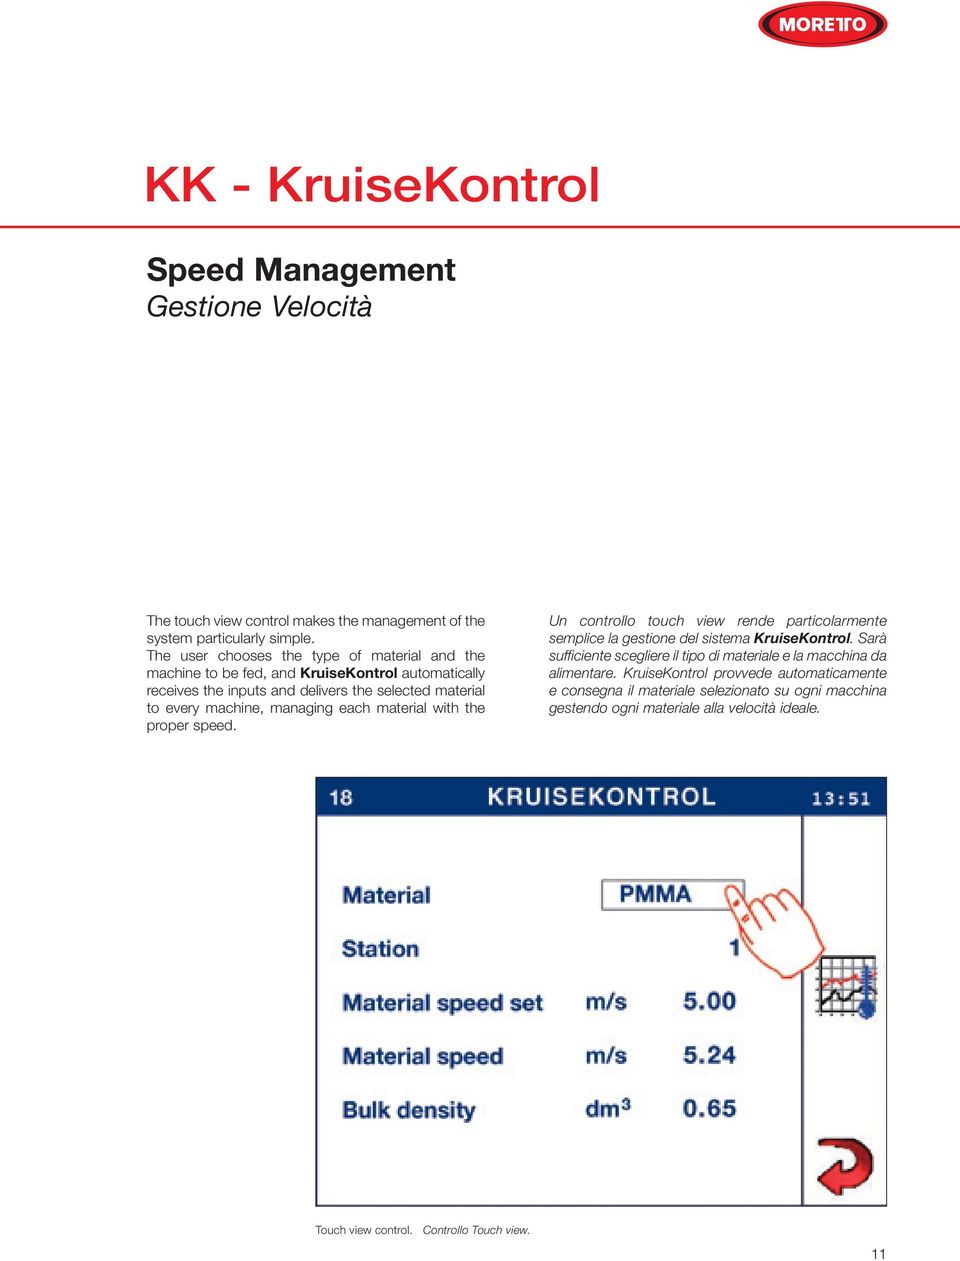 managing each material with the proper speed. Un controllo touch view rende particolarmente semplice la gestione del sistema KruiseKontrol.